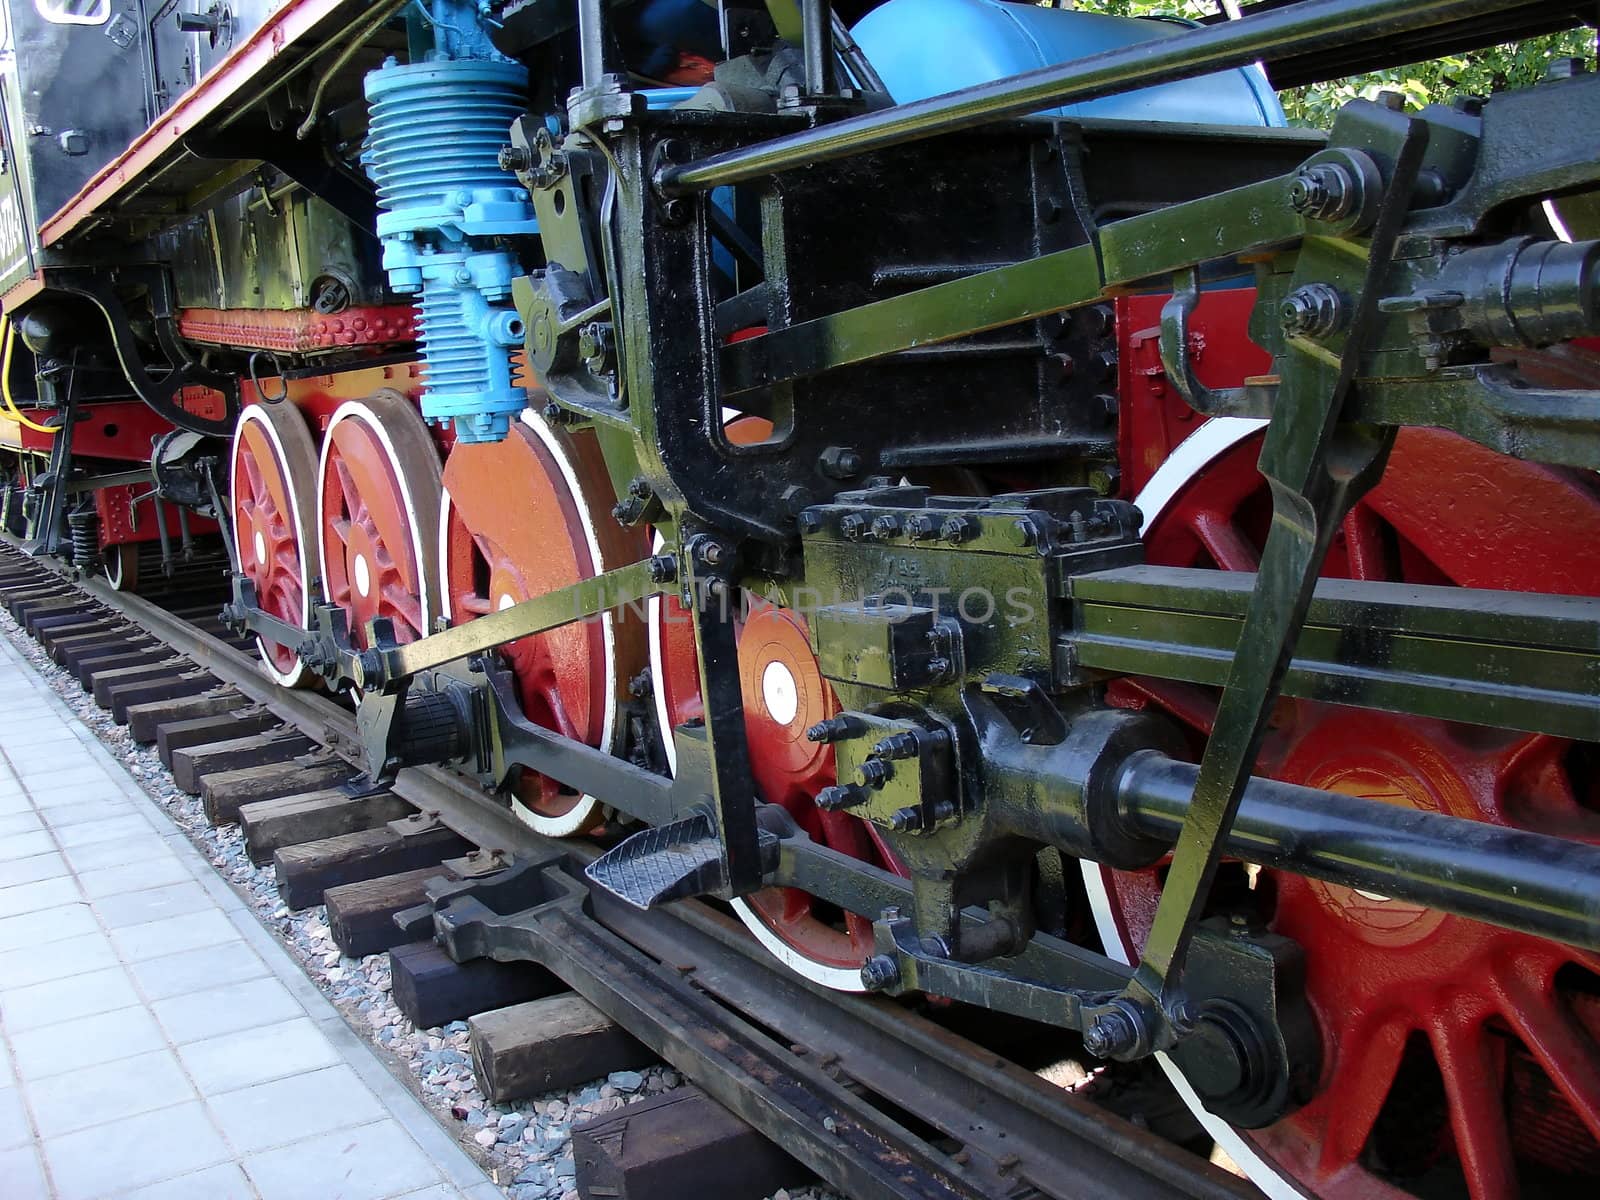 Details of the old locomotive in outdoor museum